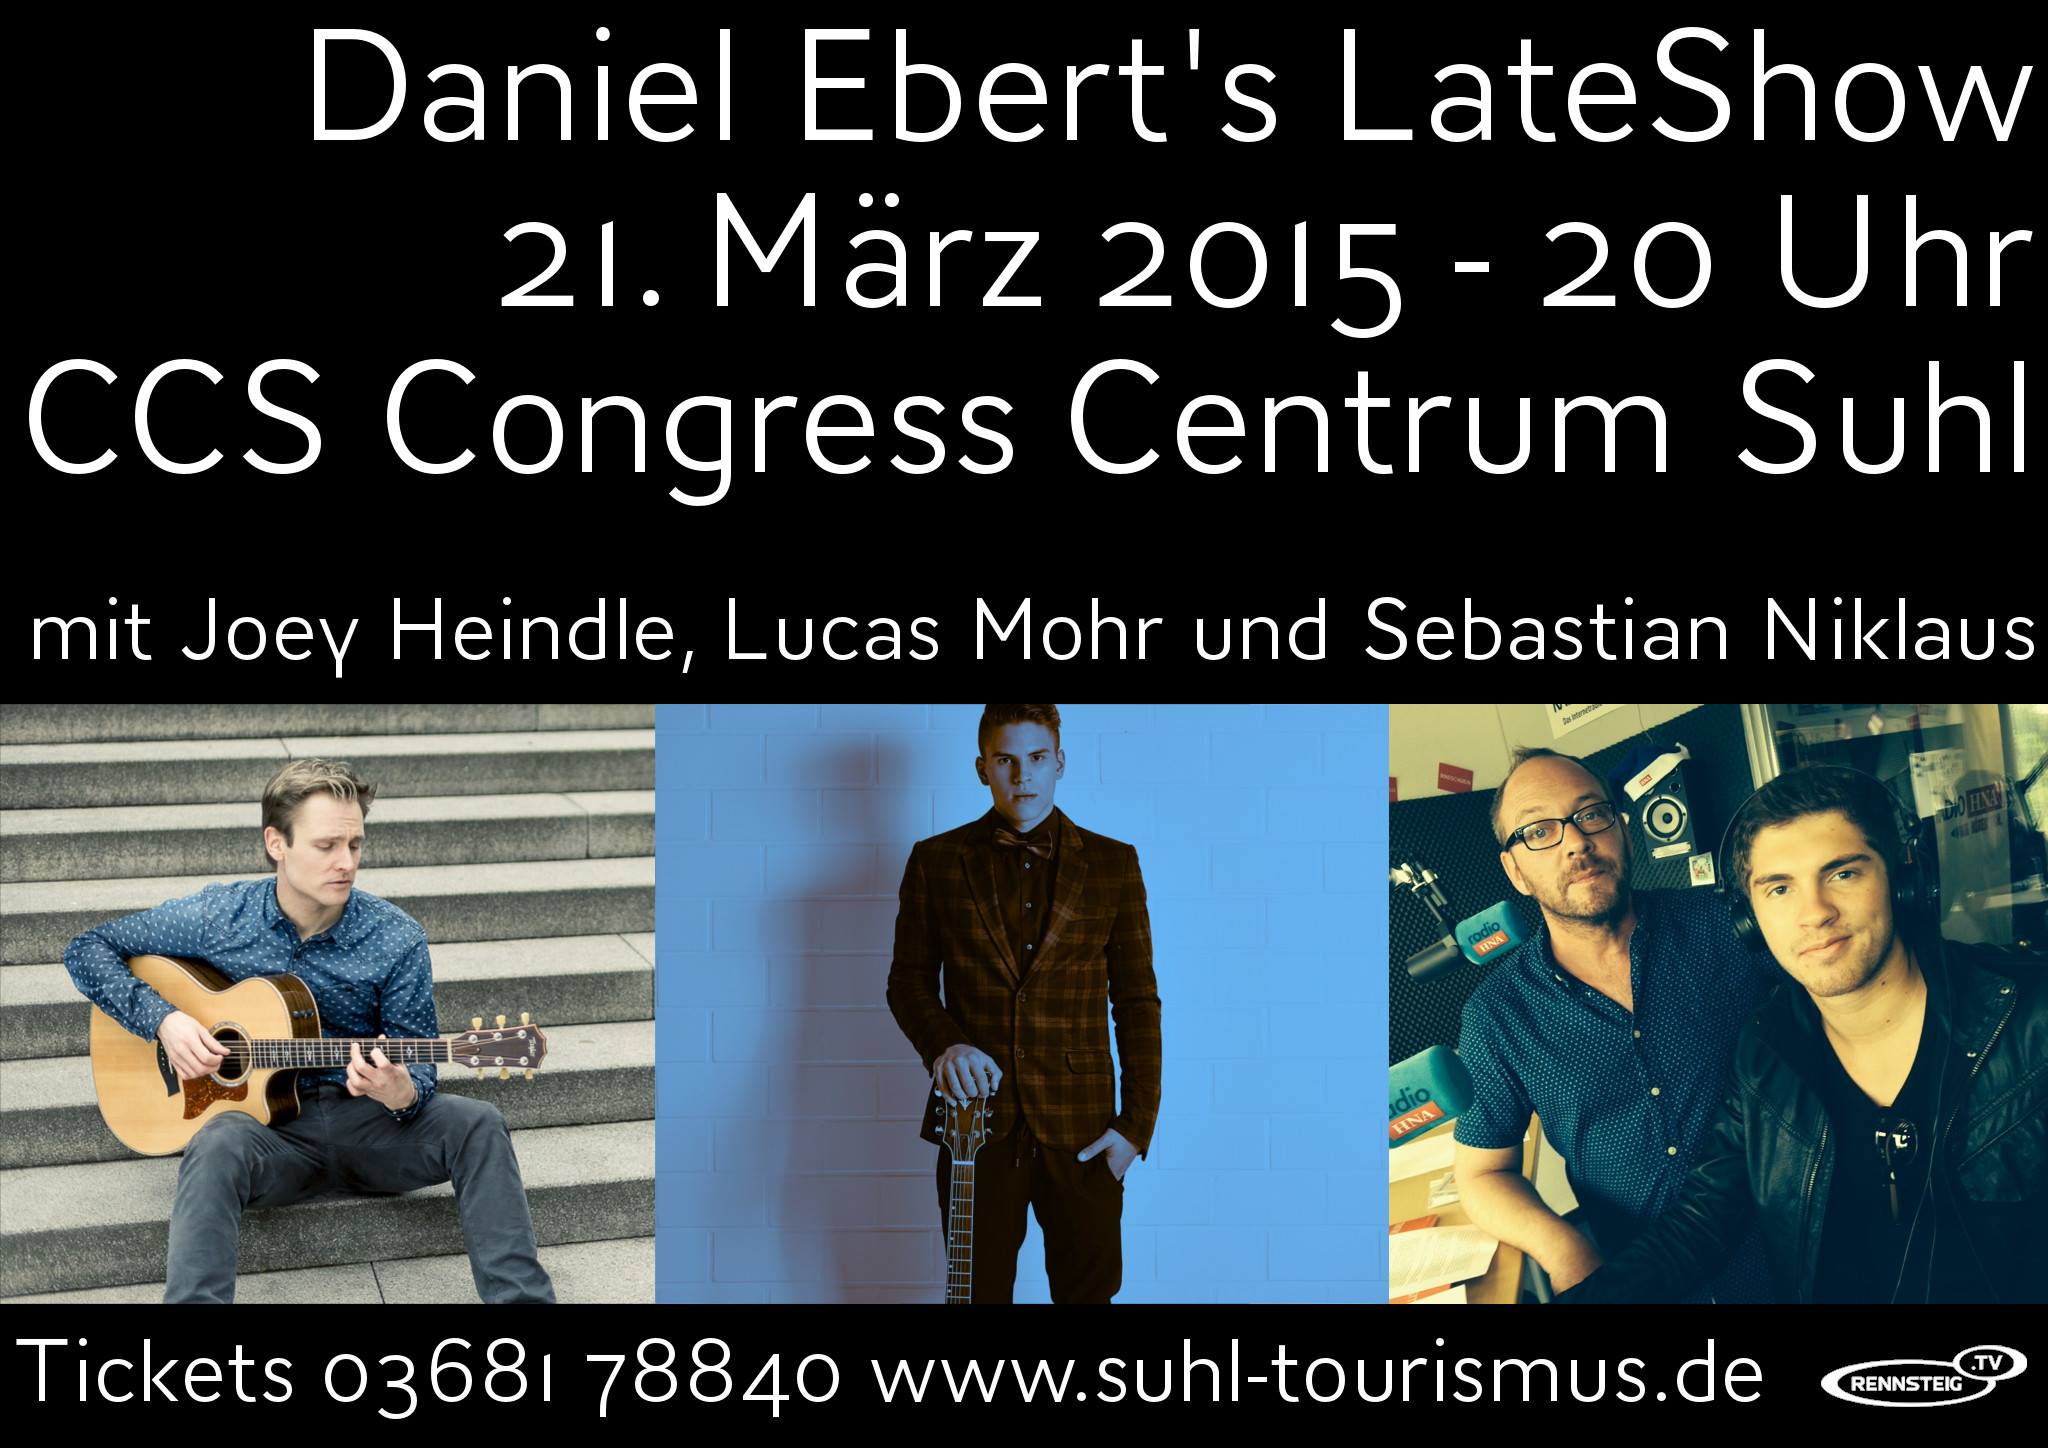 Daniel Ebert's Late Show am 21. März - mit Joey Heindle, Lucas Mohr und Sebastian Niklaus 